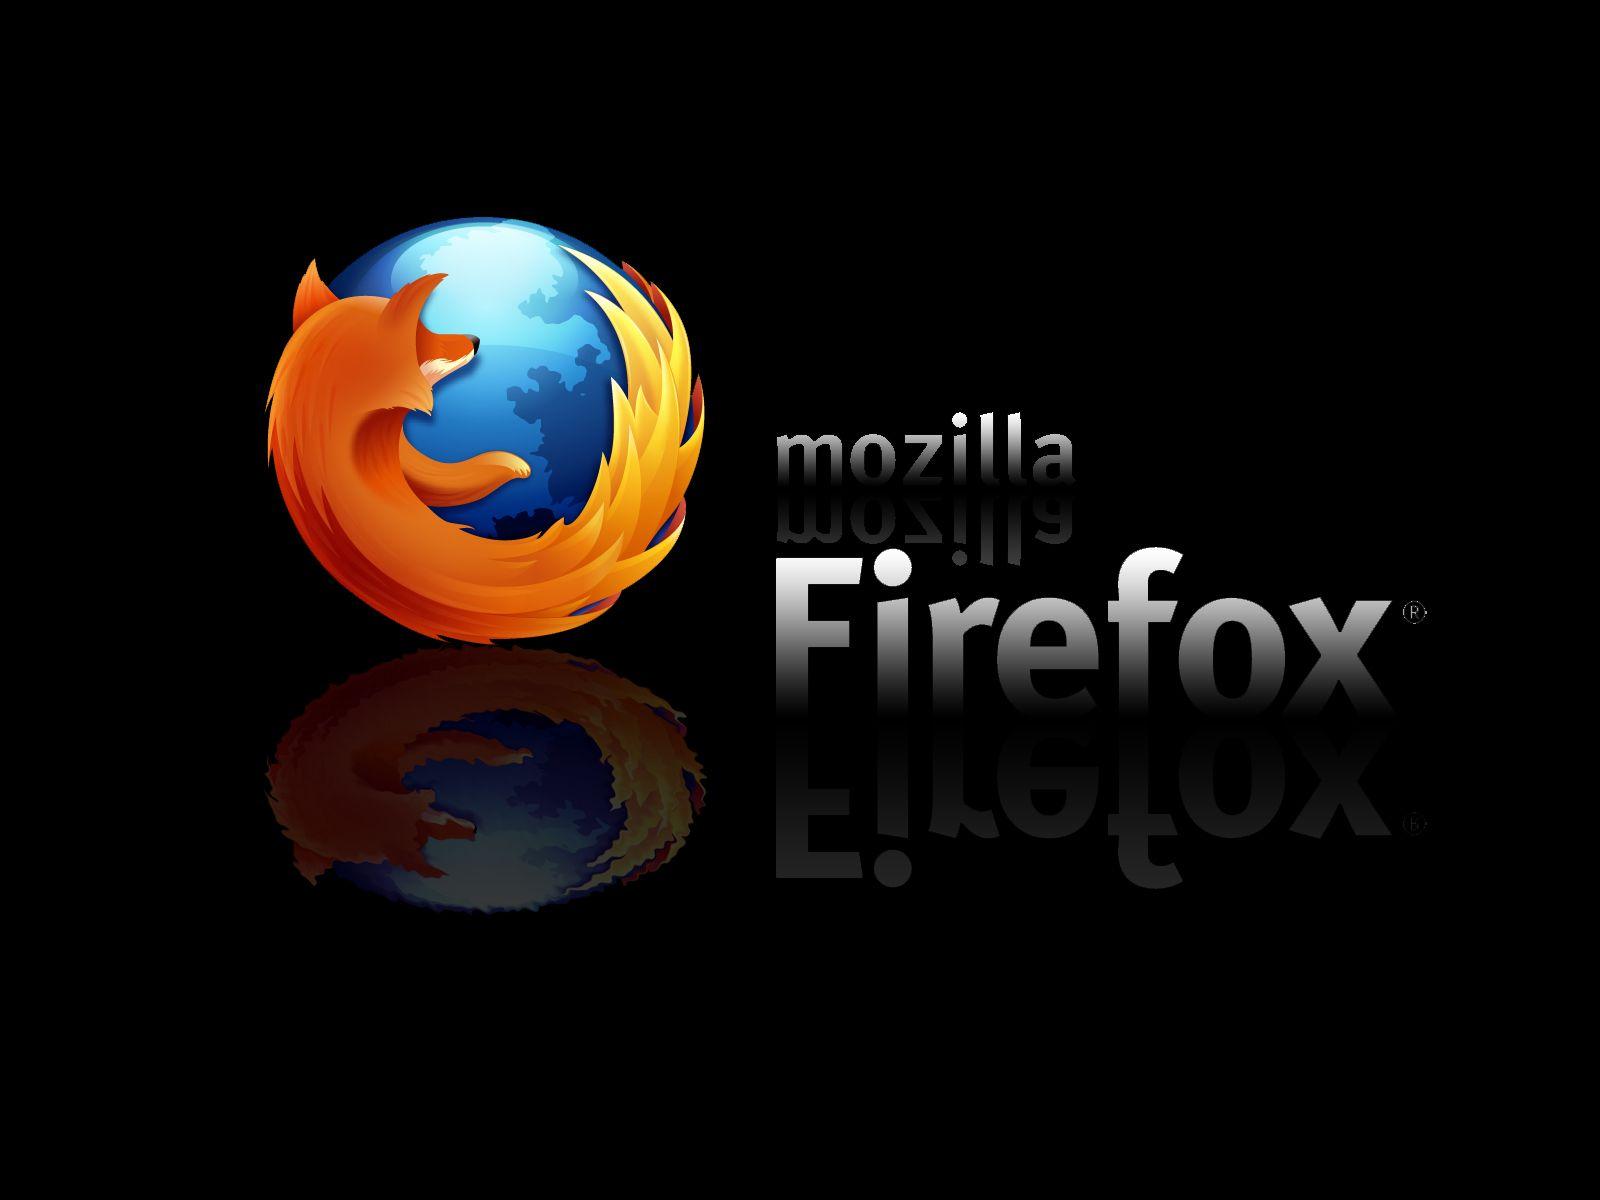 mozilla firefox wallpaper free download